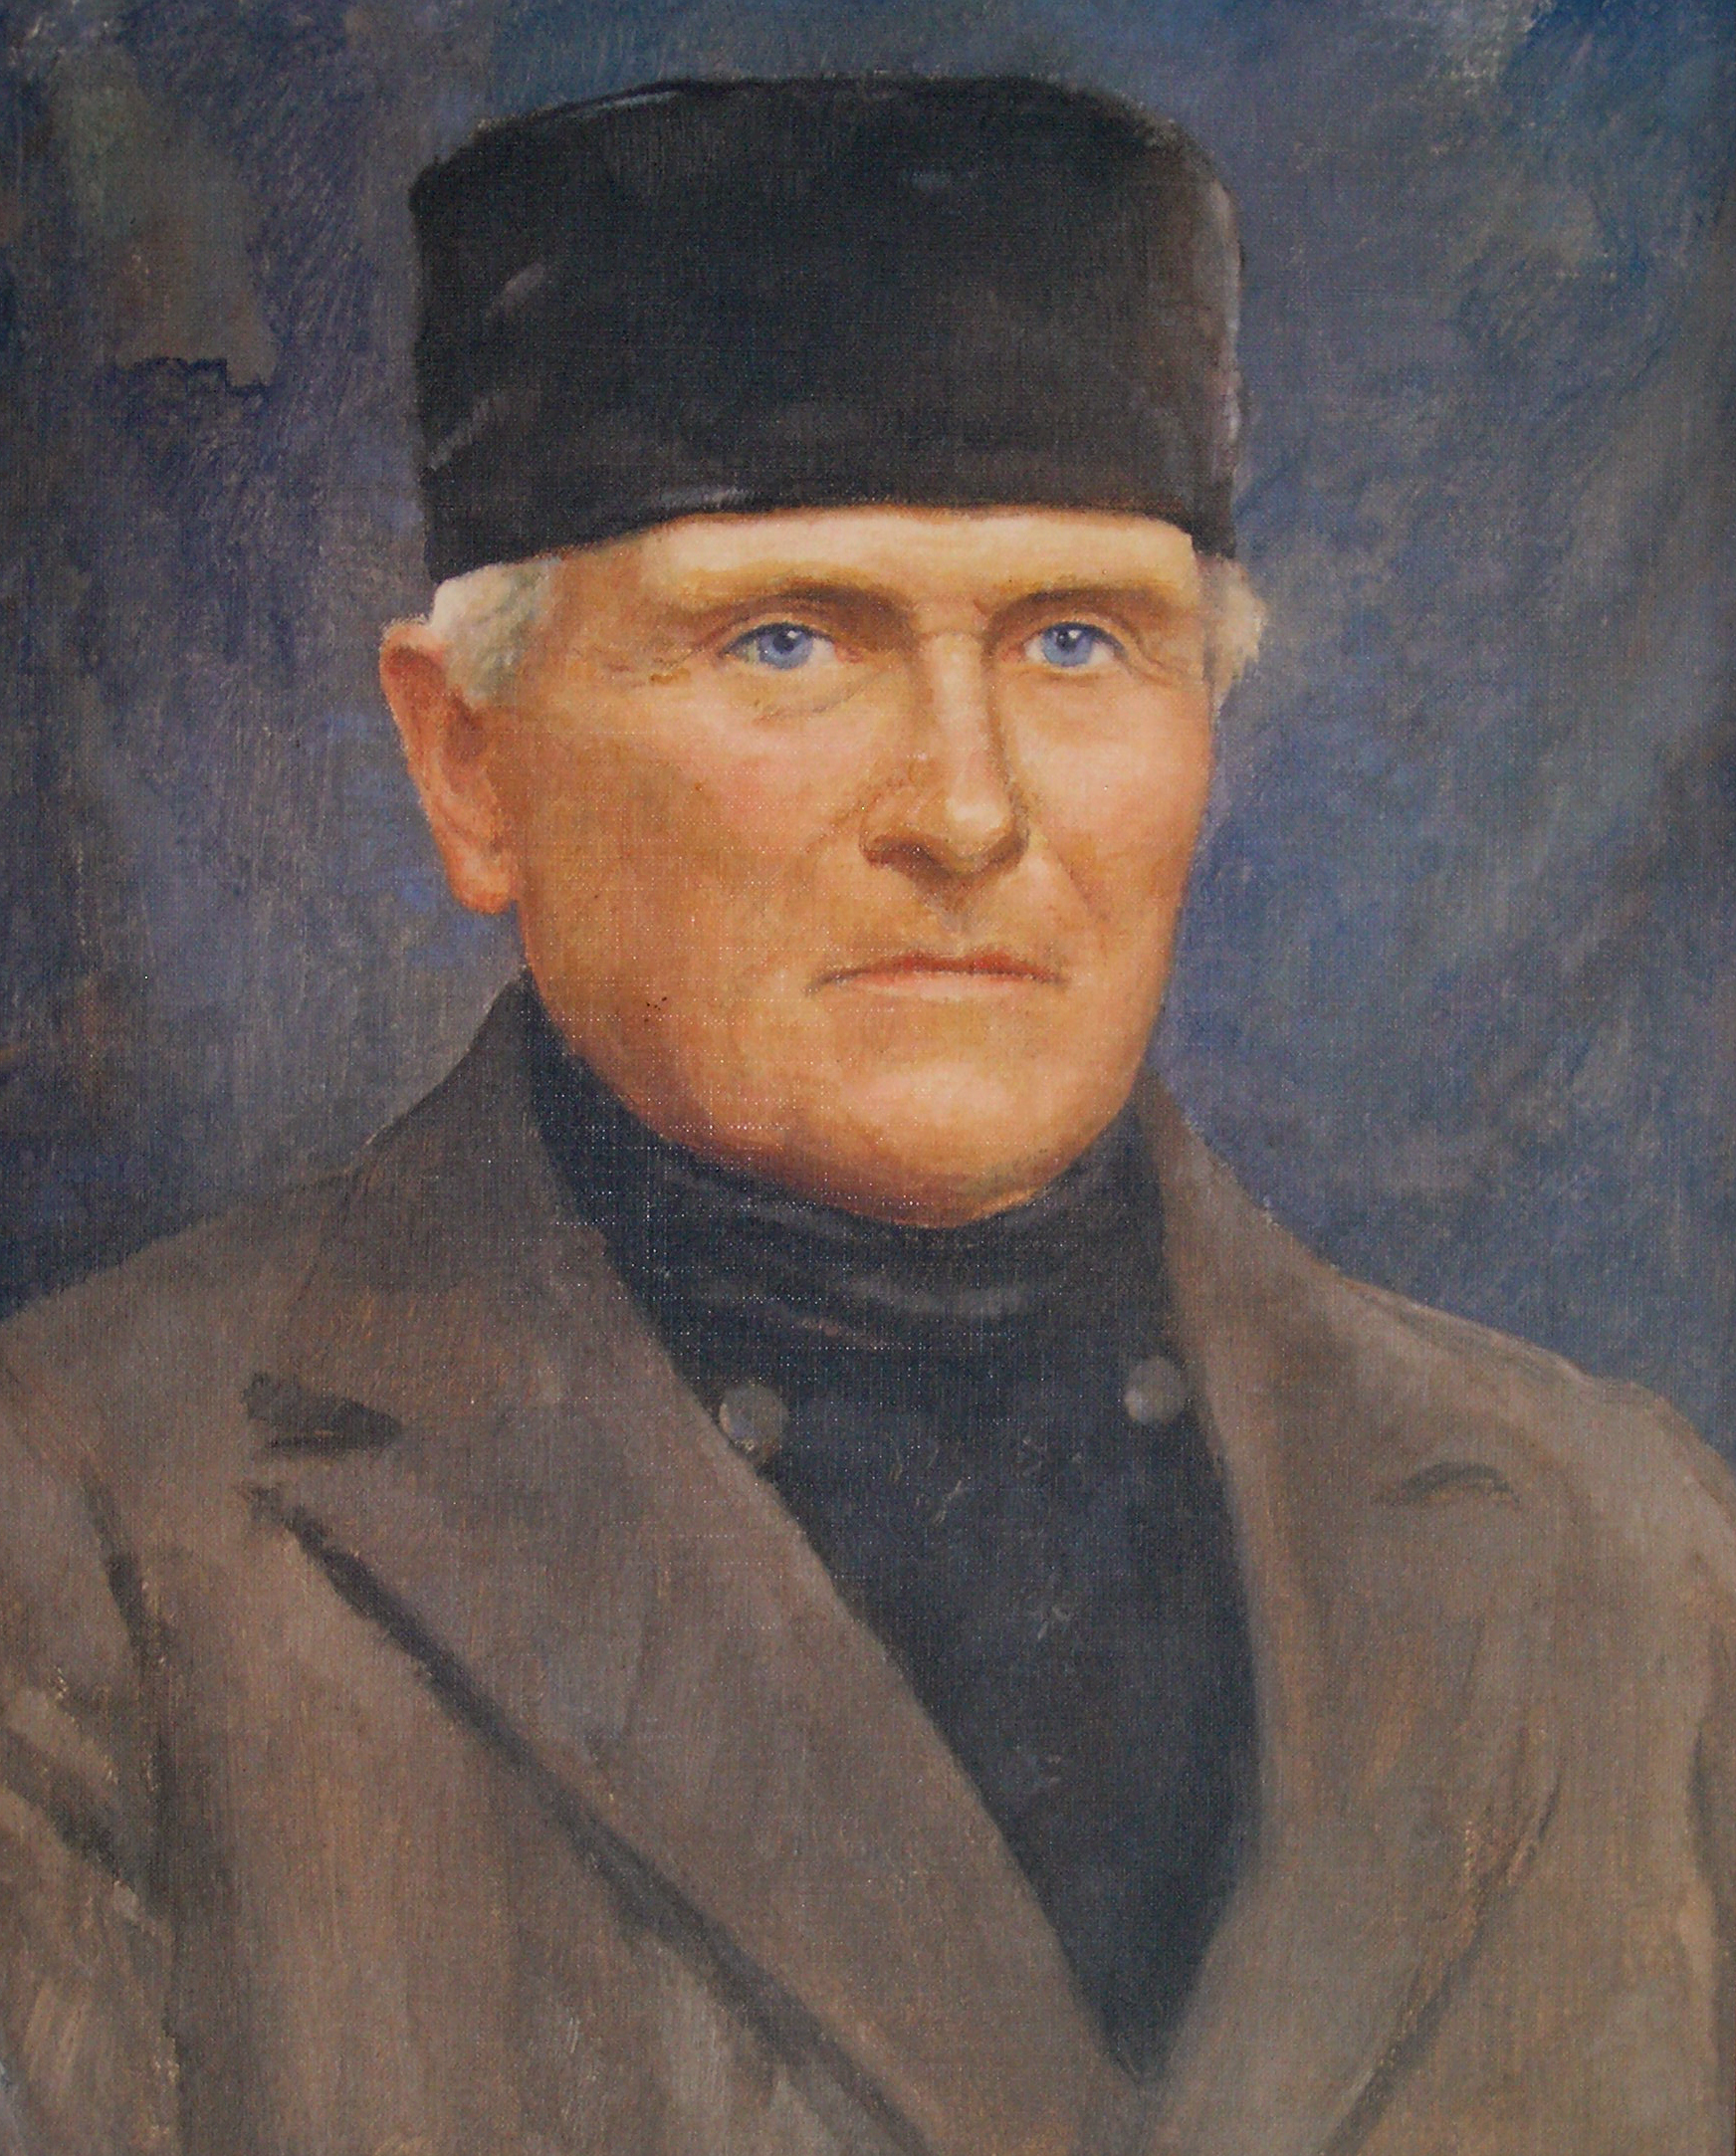 Företagets grundare Matthias Christian Rabbethge (1804 - 1902)